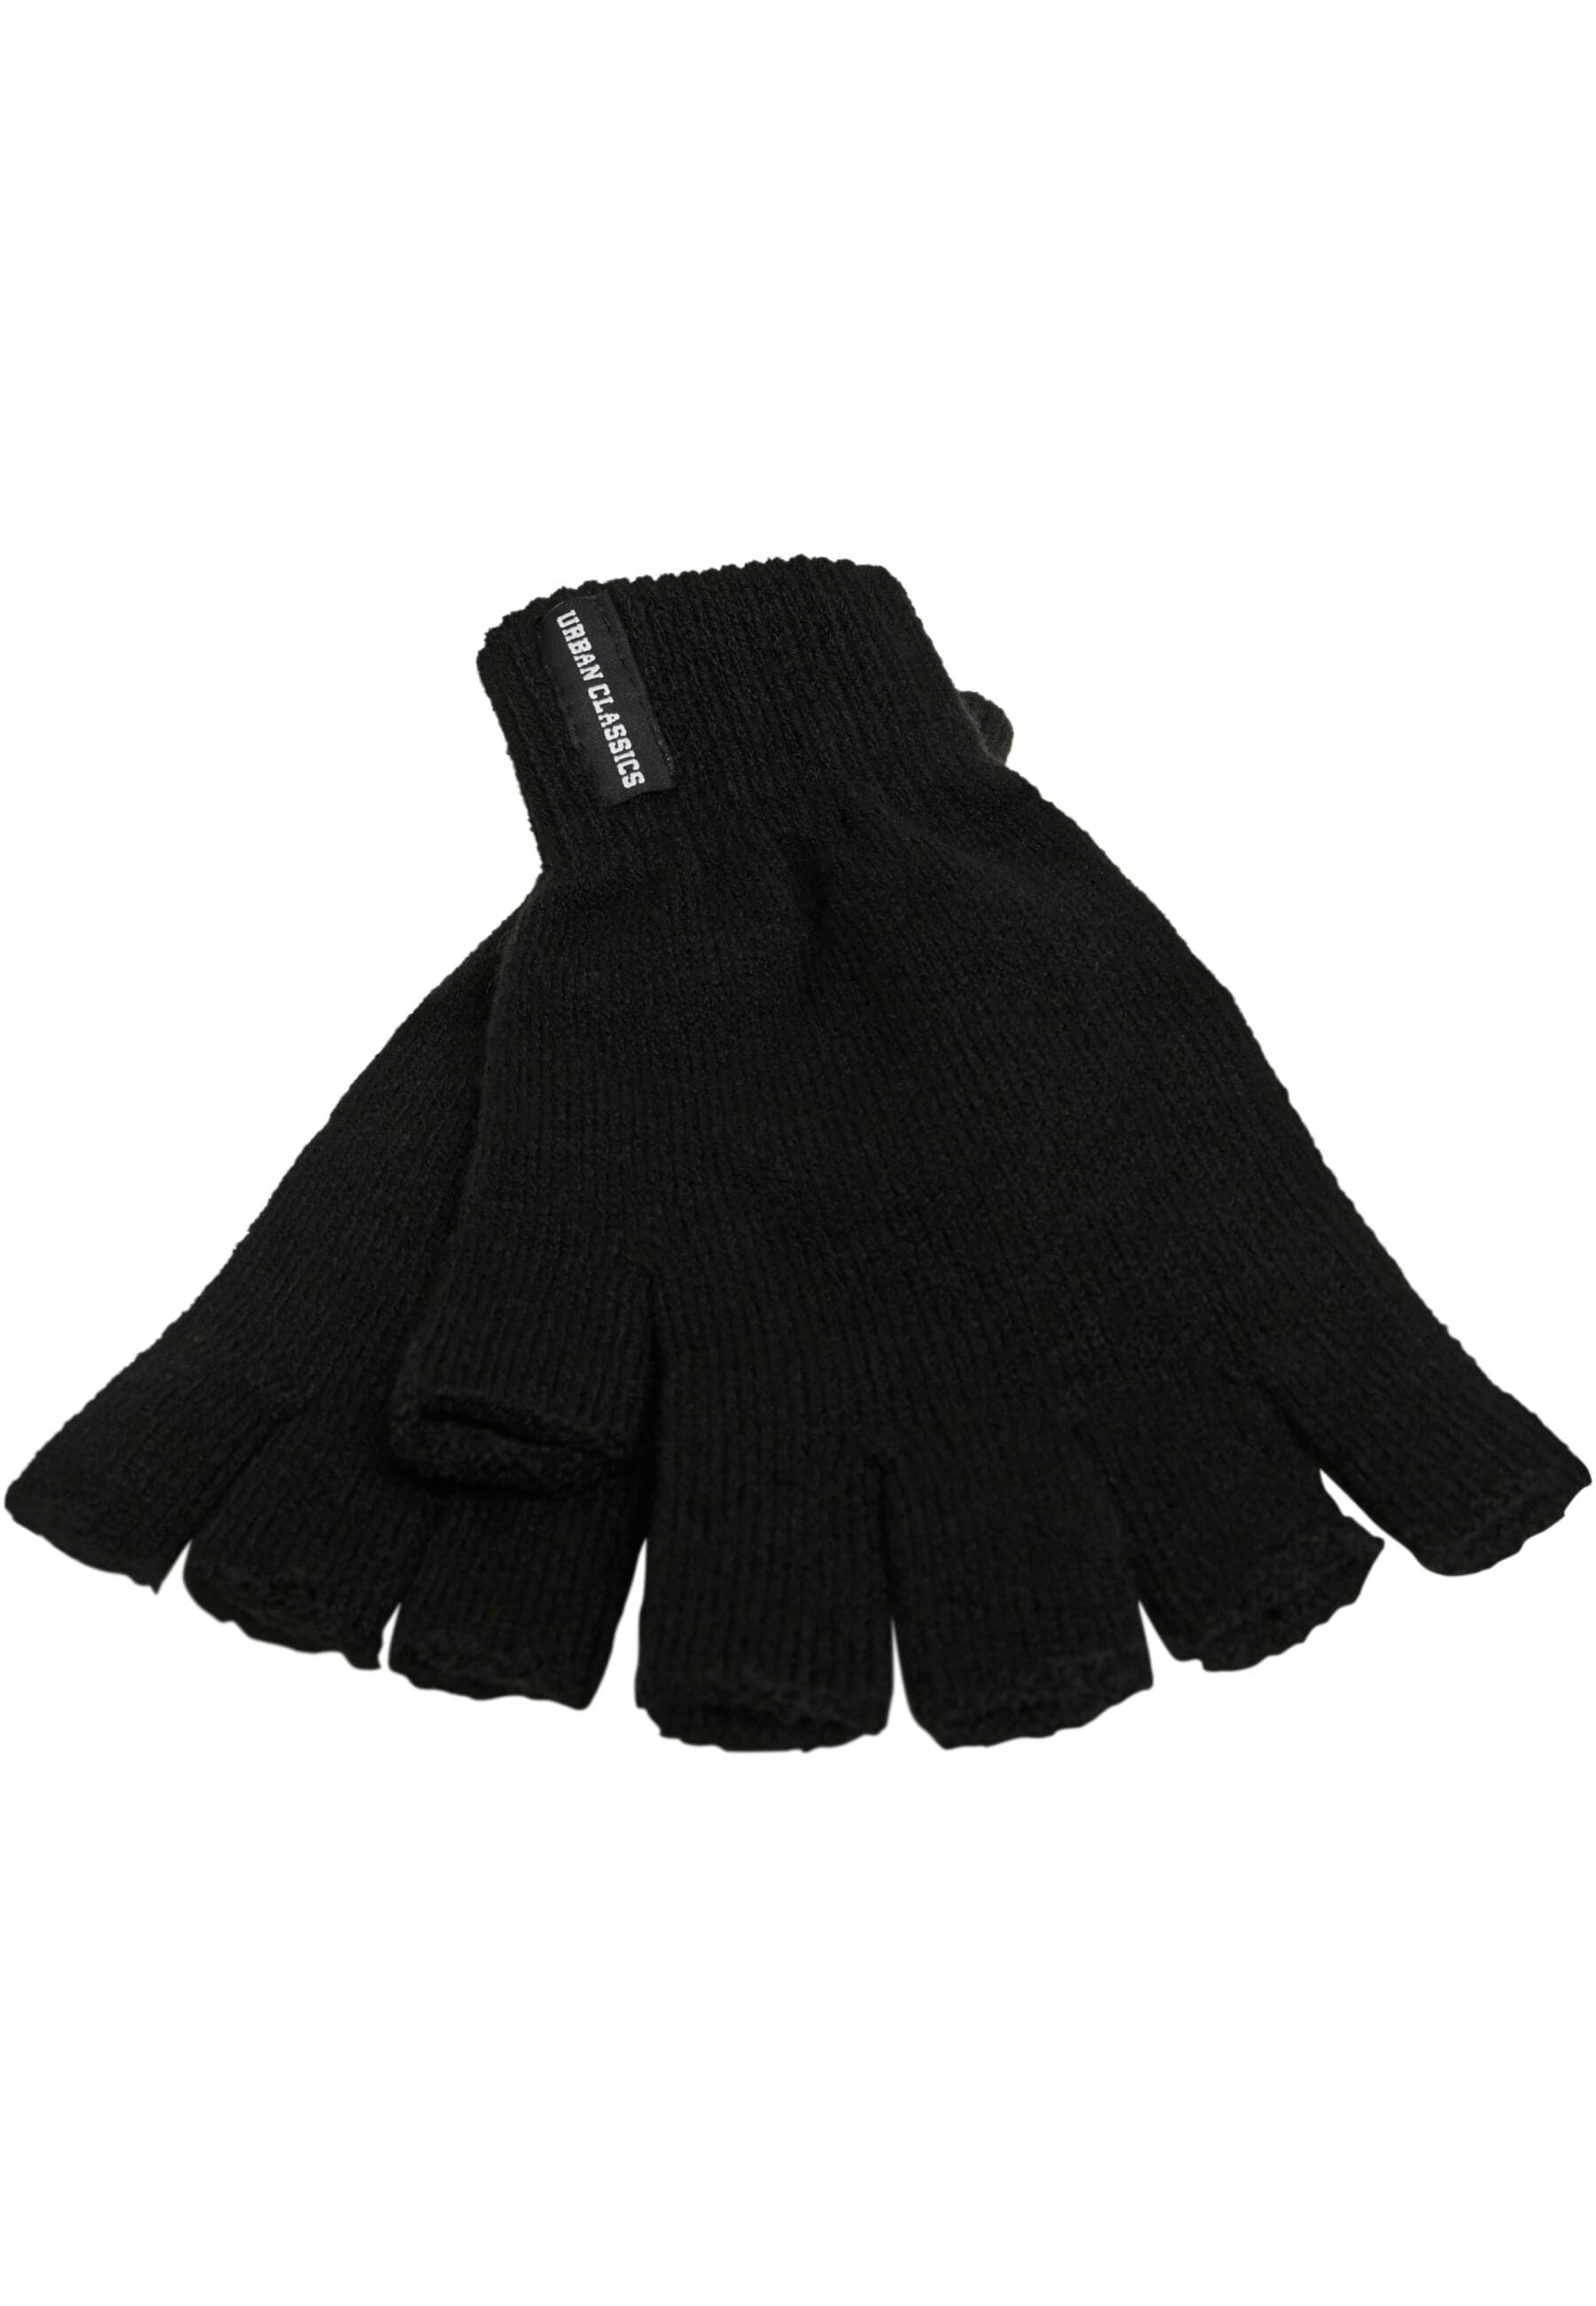 URBAN CLASSICS Baumwollhandschuhe »Urban Classics Unisex Half Finger Gloves 2-Pack«